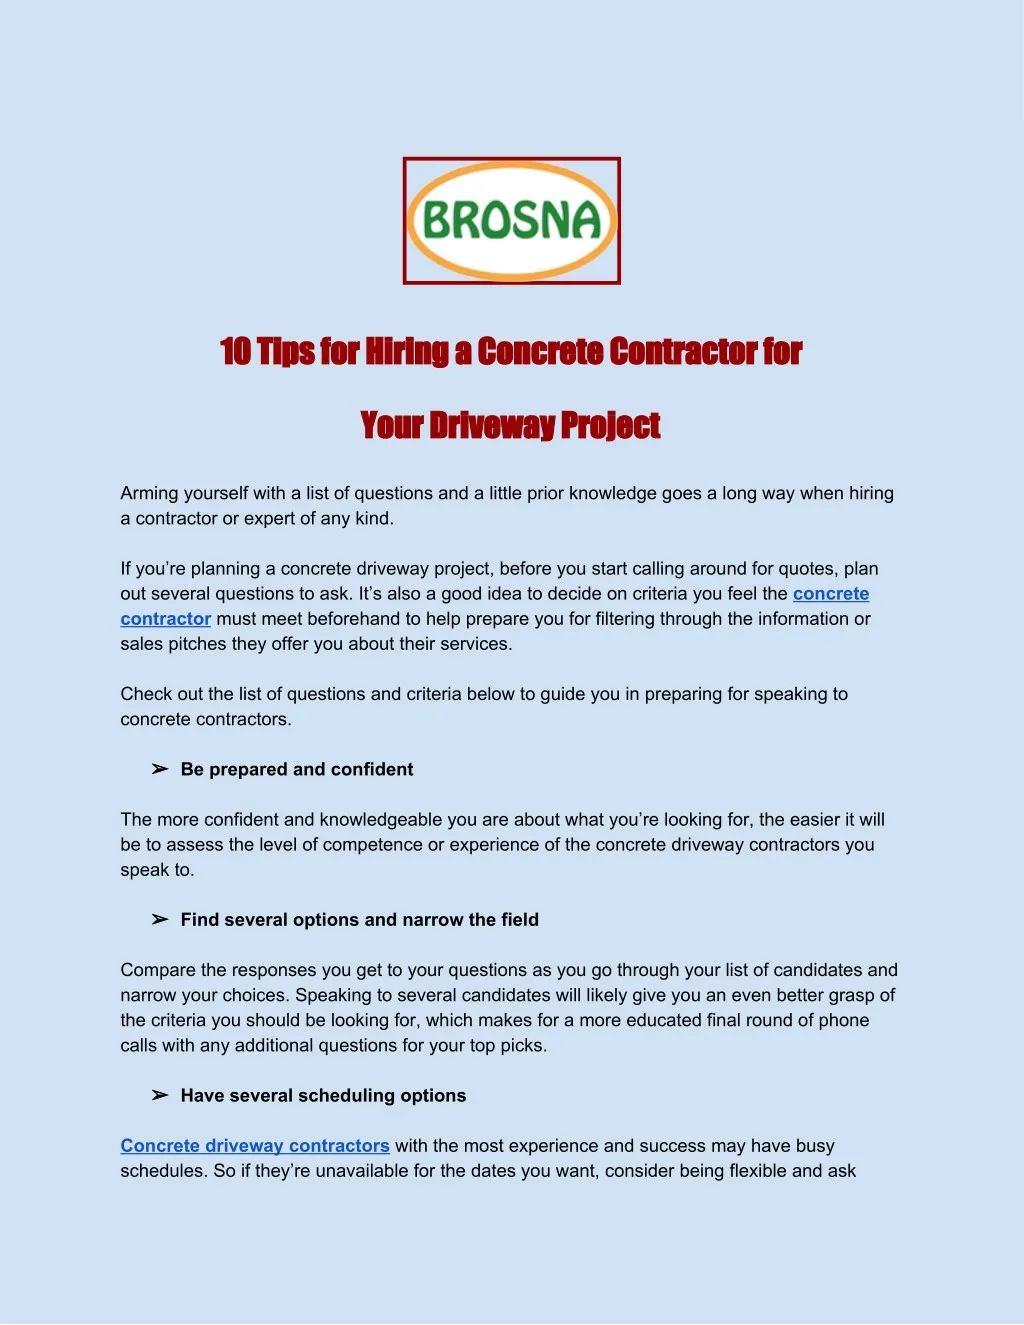 10 tips for hiring a concrete contractor